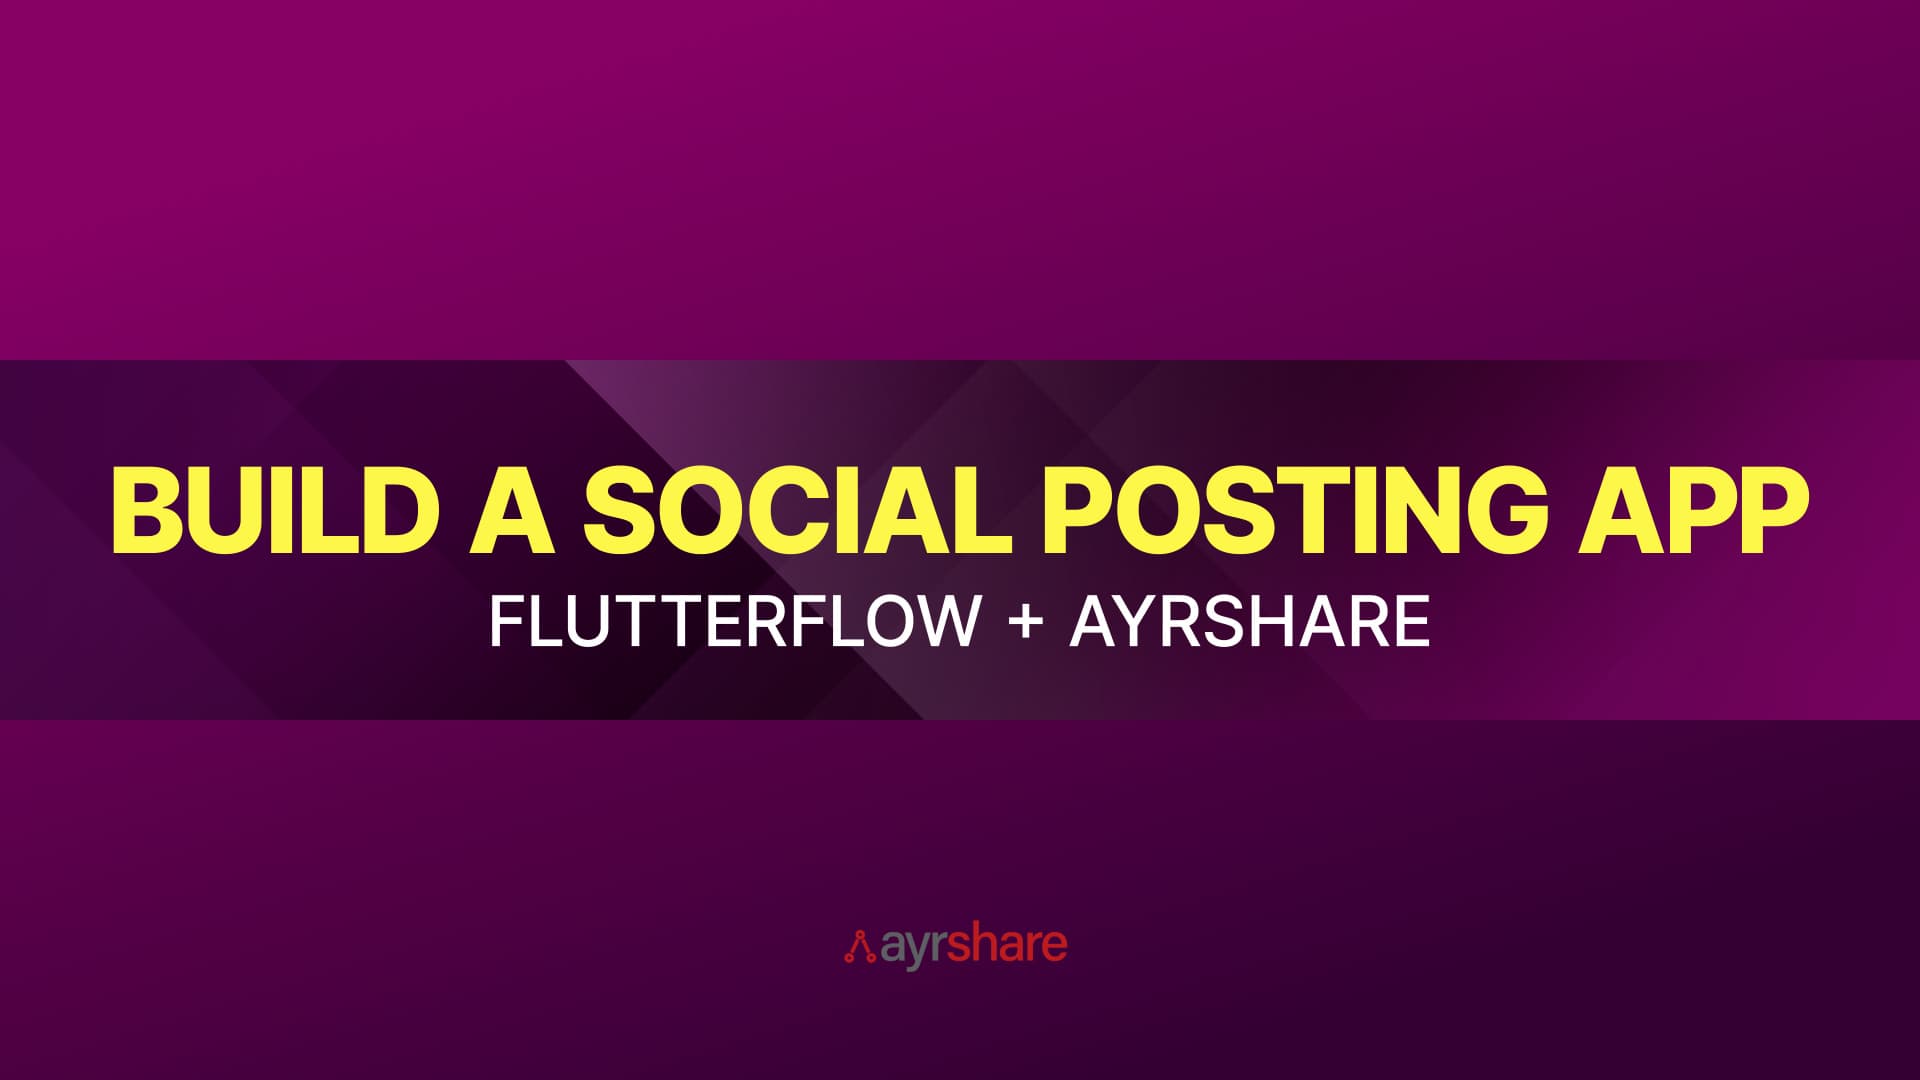 flutterflow image